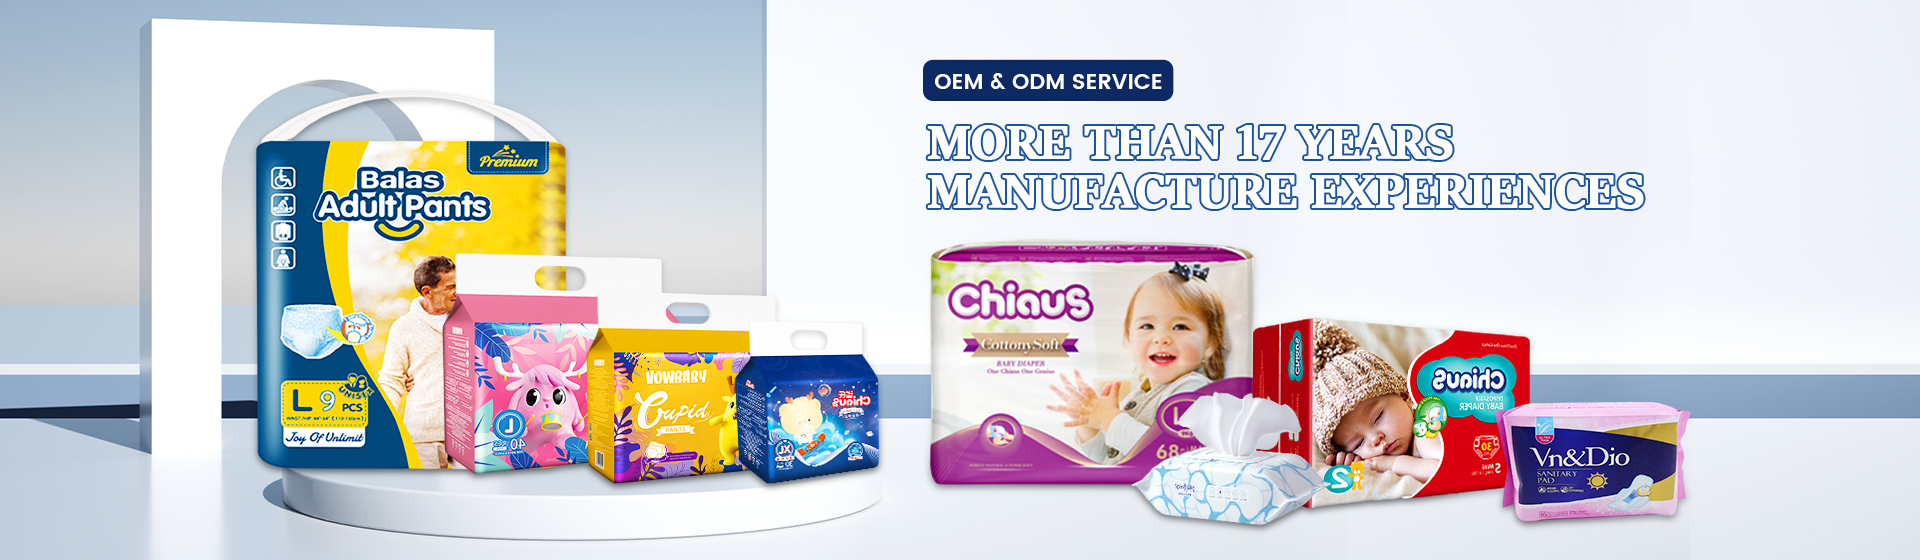 Chiaus تولید کننده پوشک، توزیع کنندگان خدمات OEM موجود در بازار خارج از کشور را می خواستند